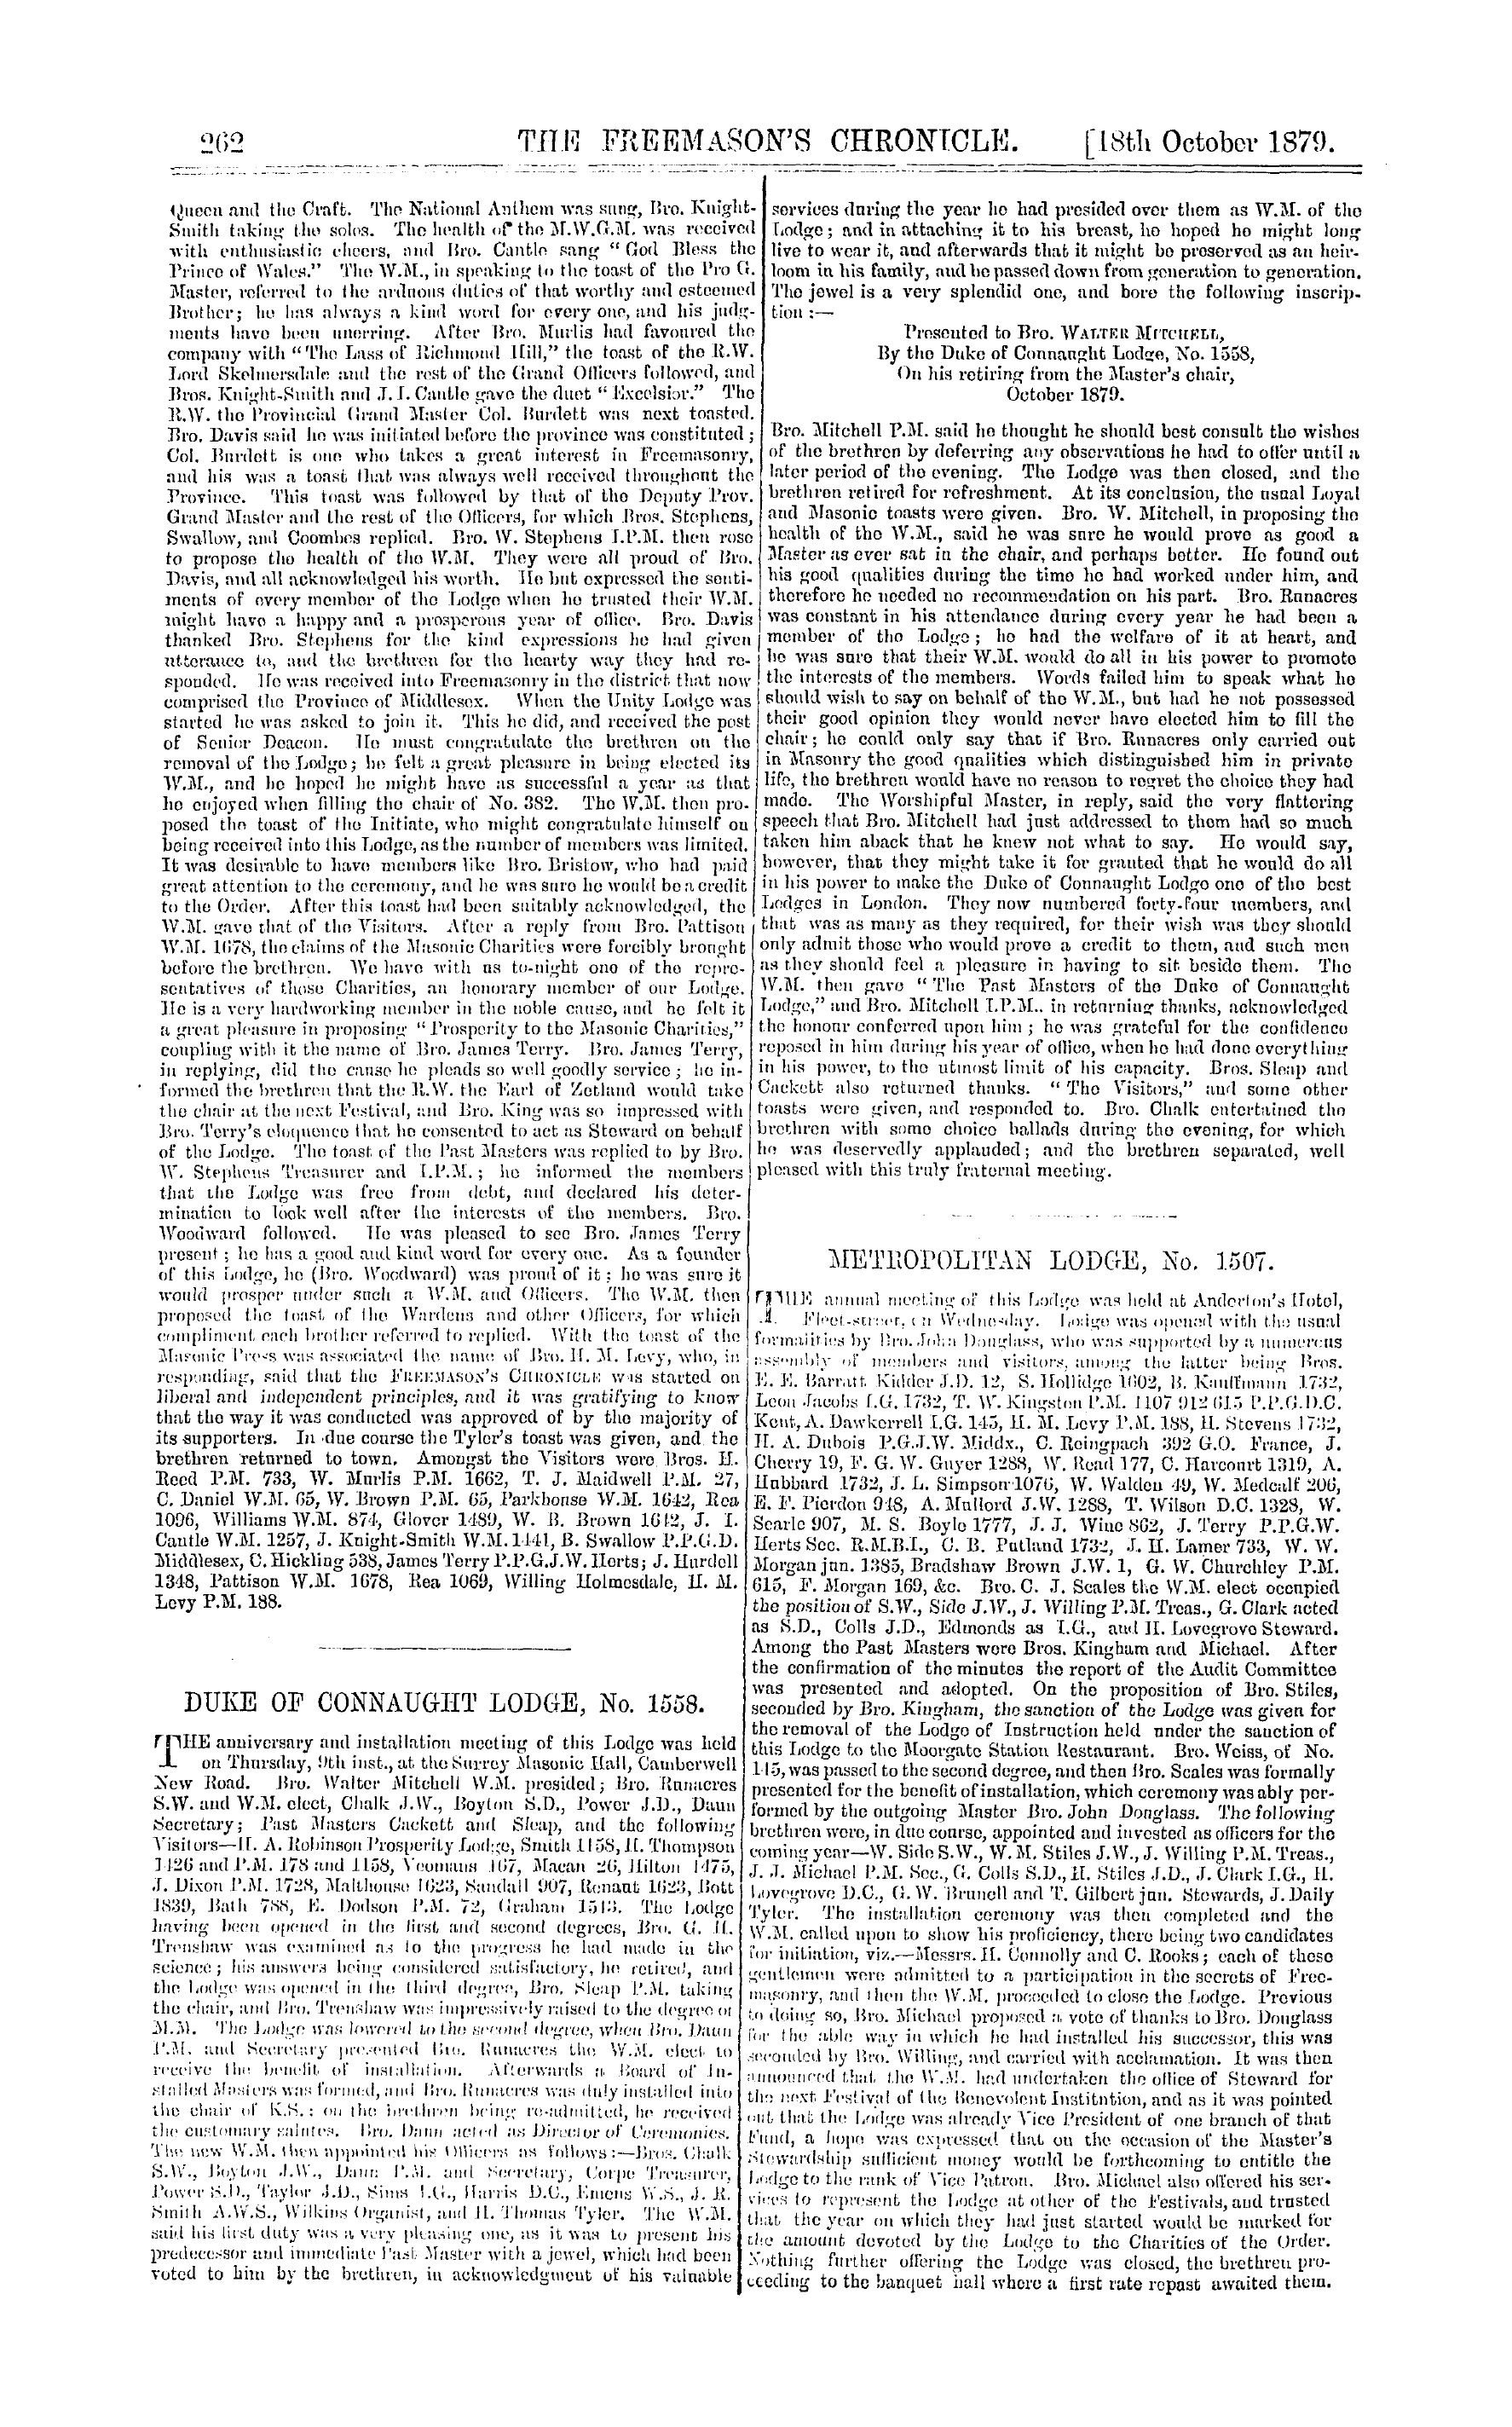 The Freemason's Chronicle: 1879-10-18 - Metropolitan Lodge, No, 1507.